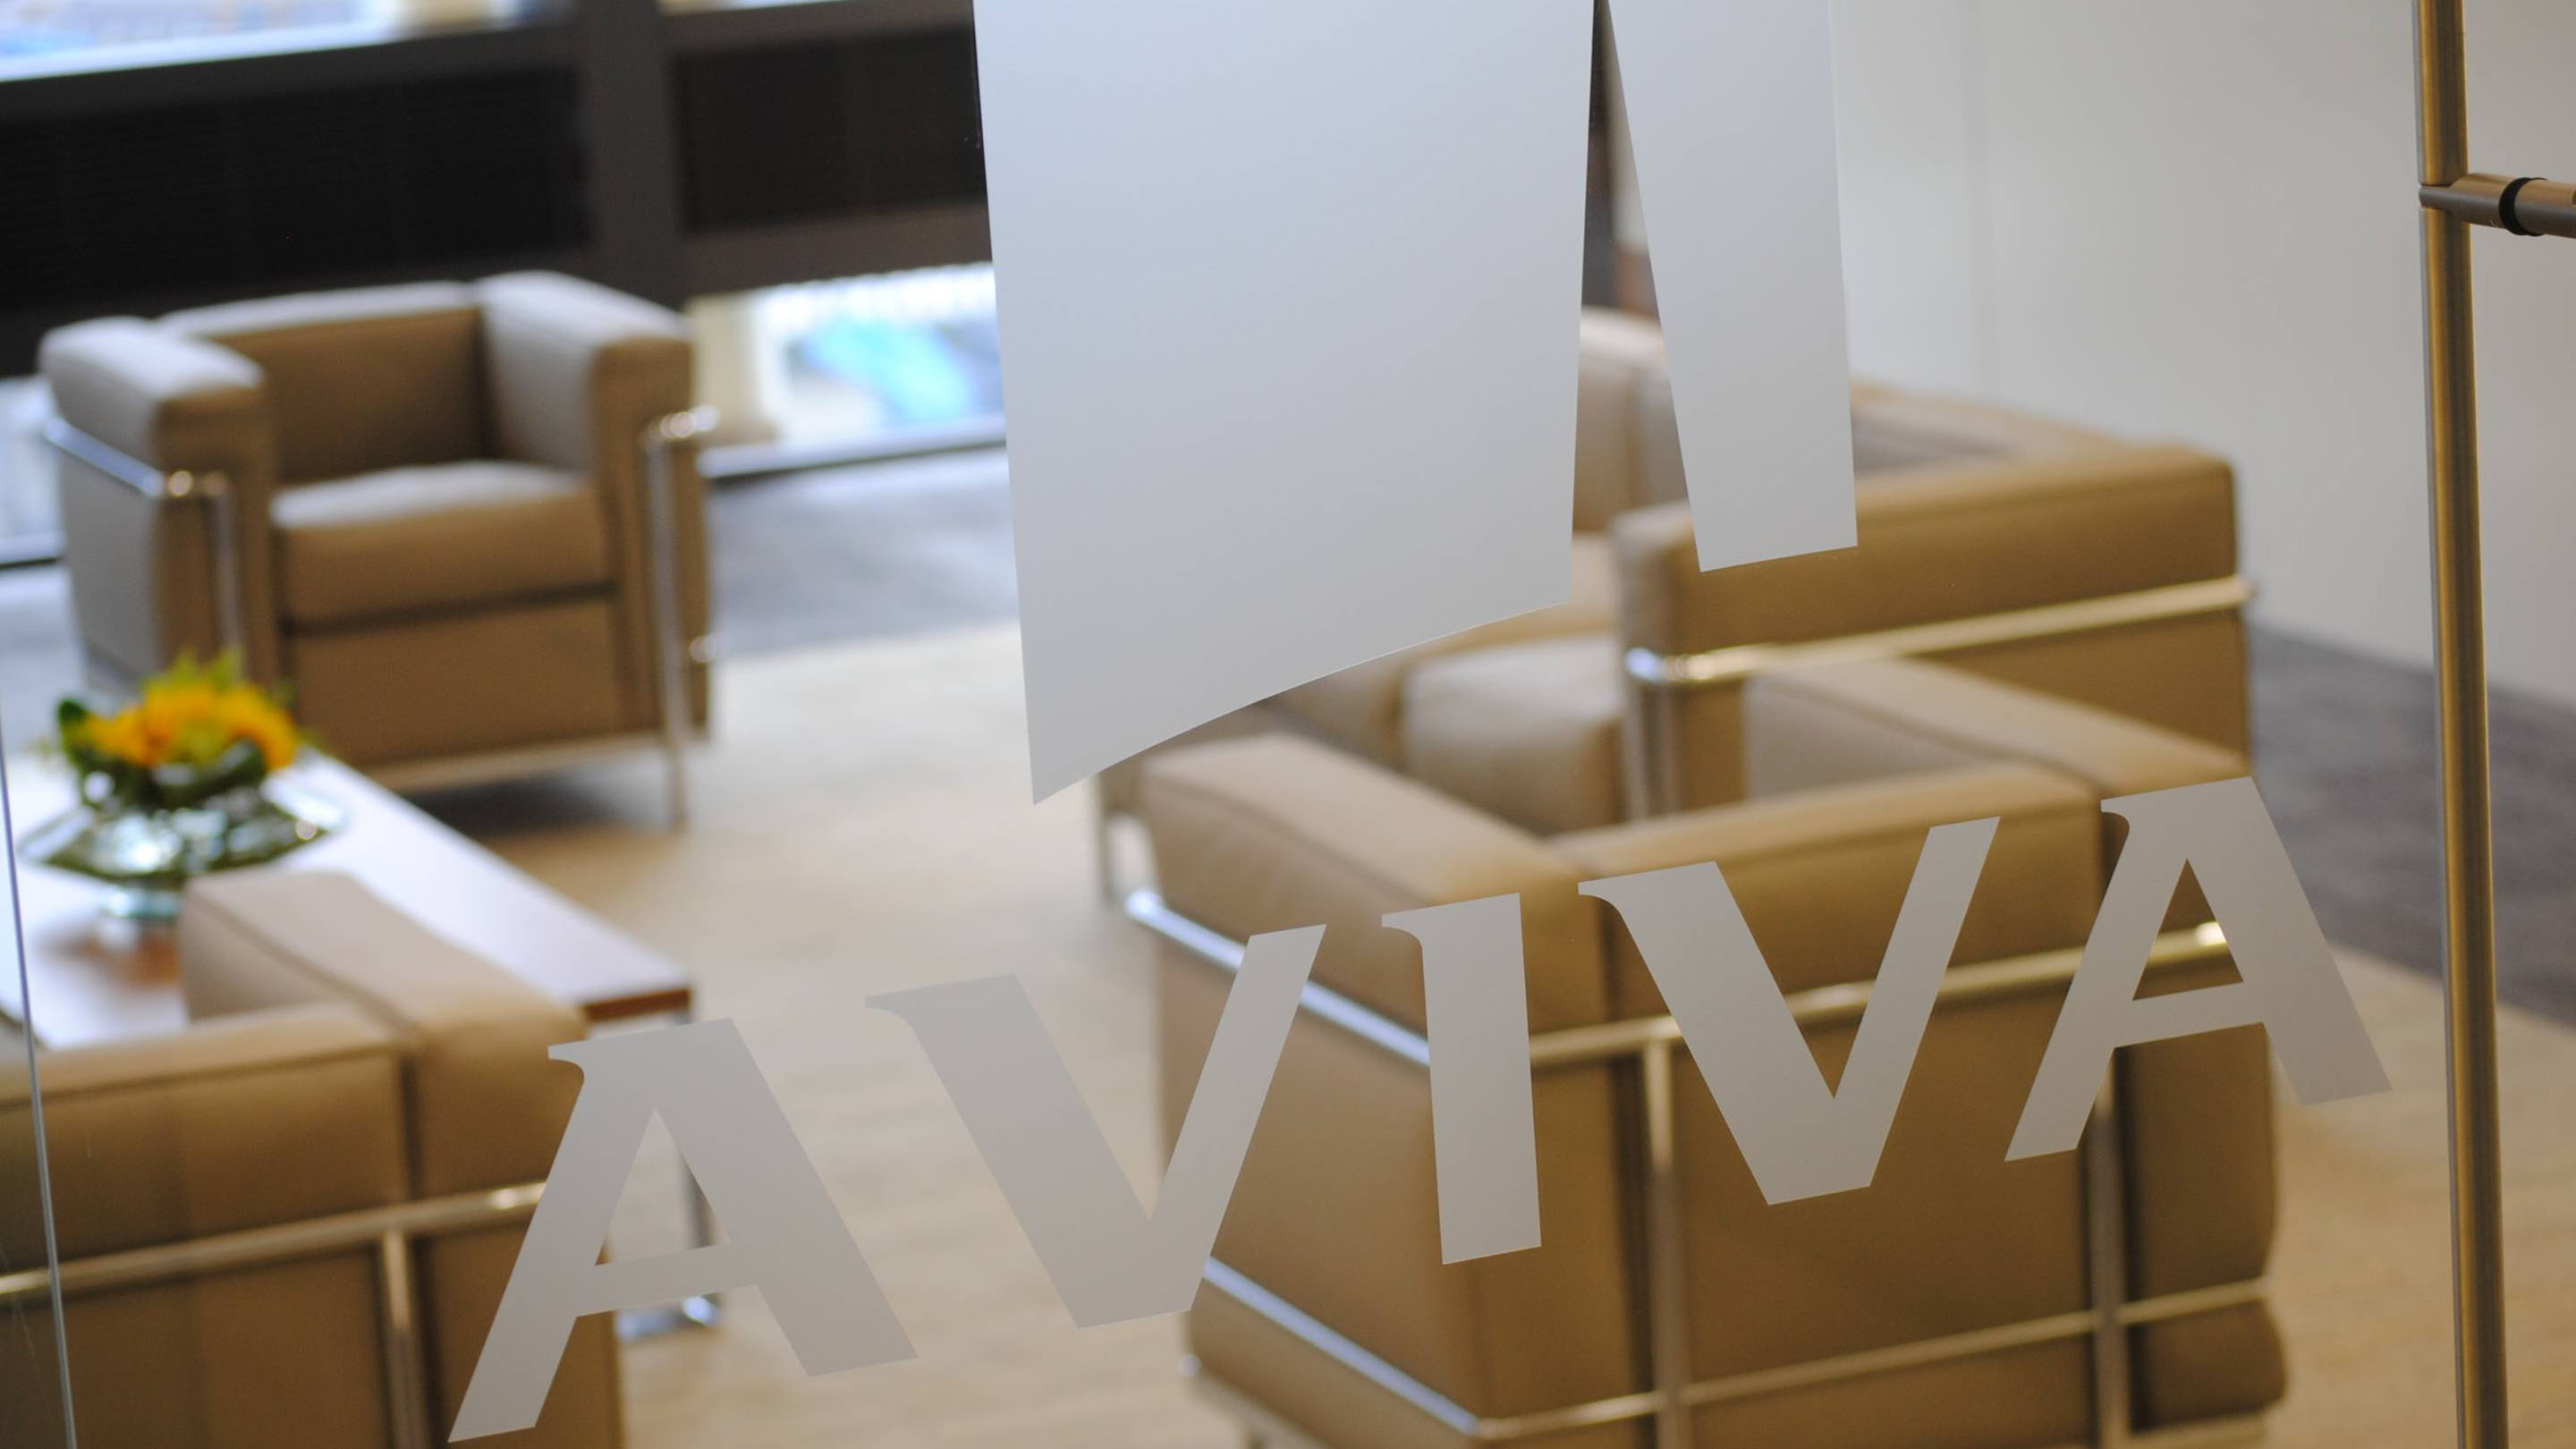 Aviva logo on office door